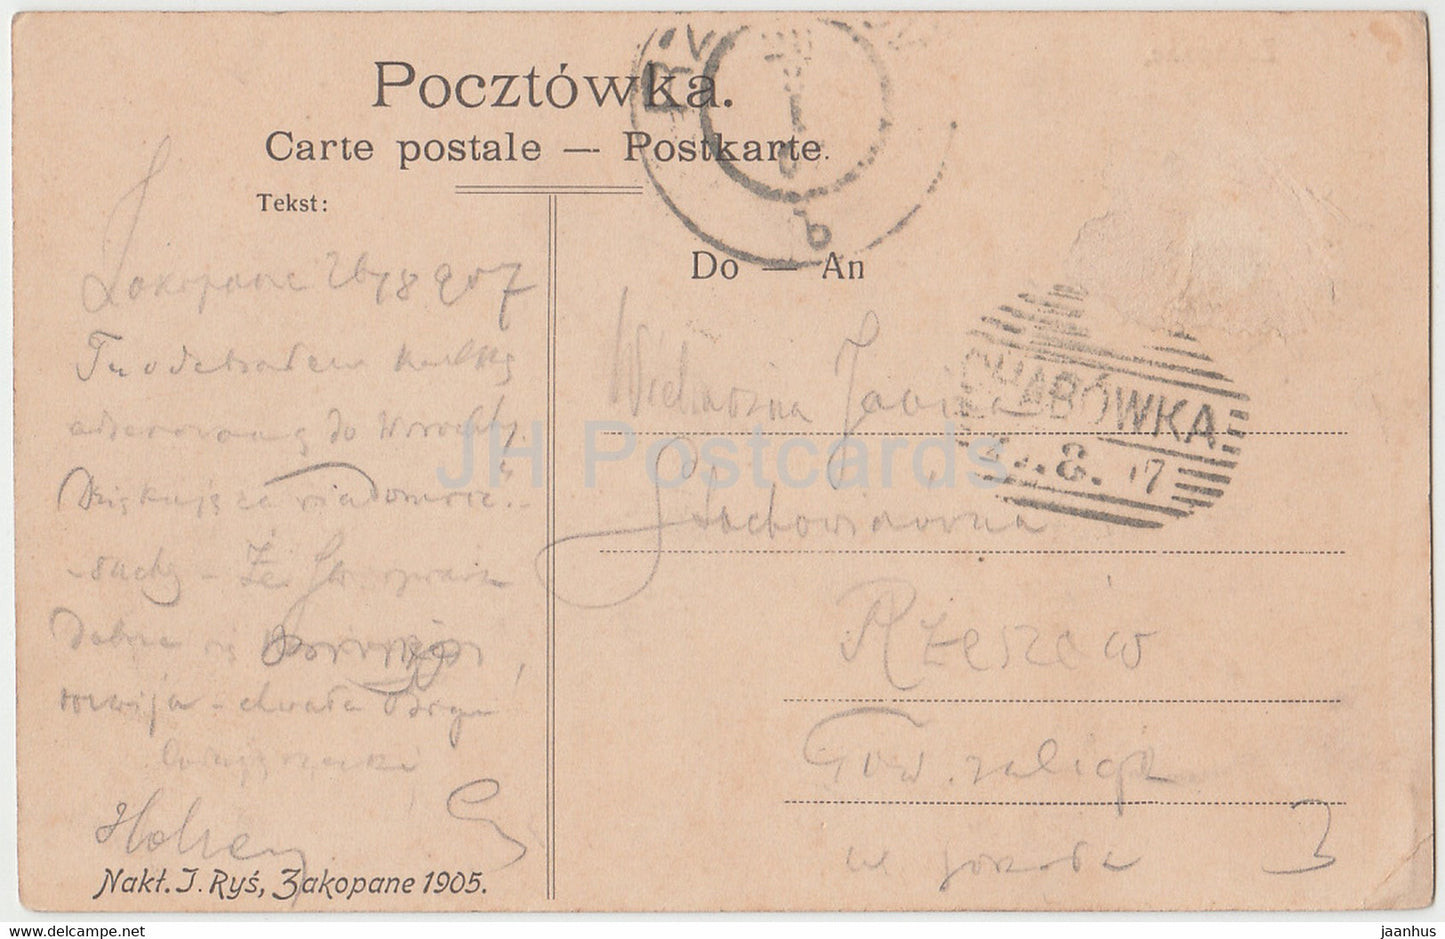 Zakopane - old postcard - 1907 - Poland - used